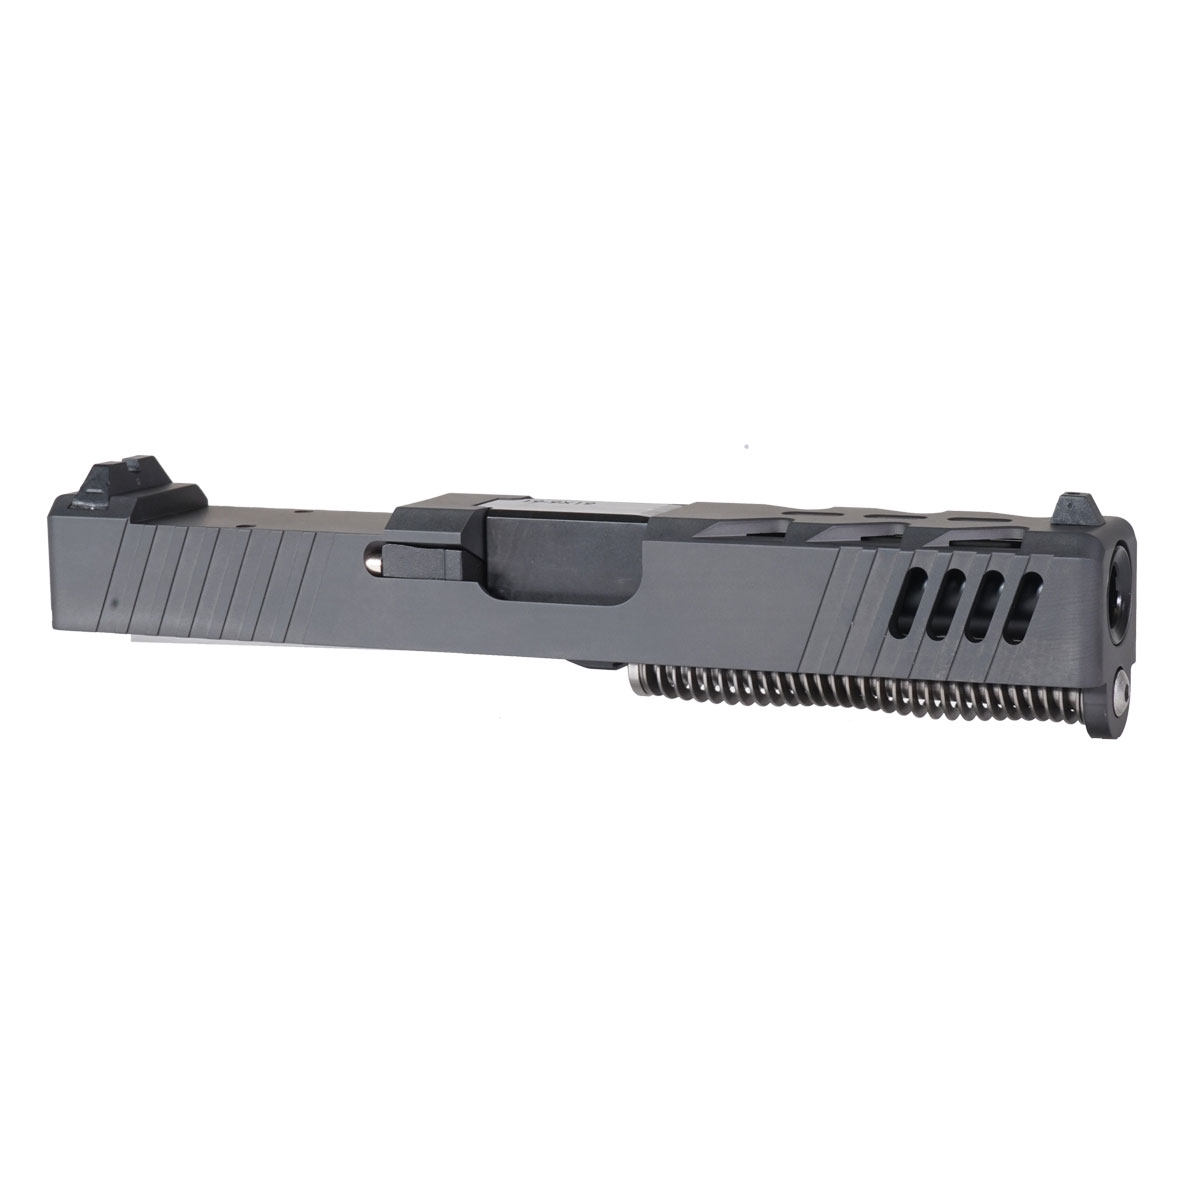 DD 'The Yiker' 9mm Complete Slide Kit - Glock 19 Gen 1-3 Compatible